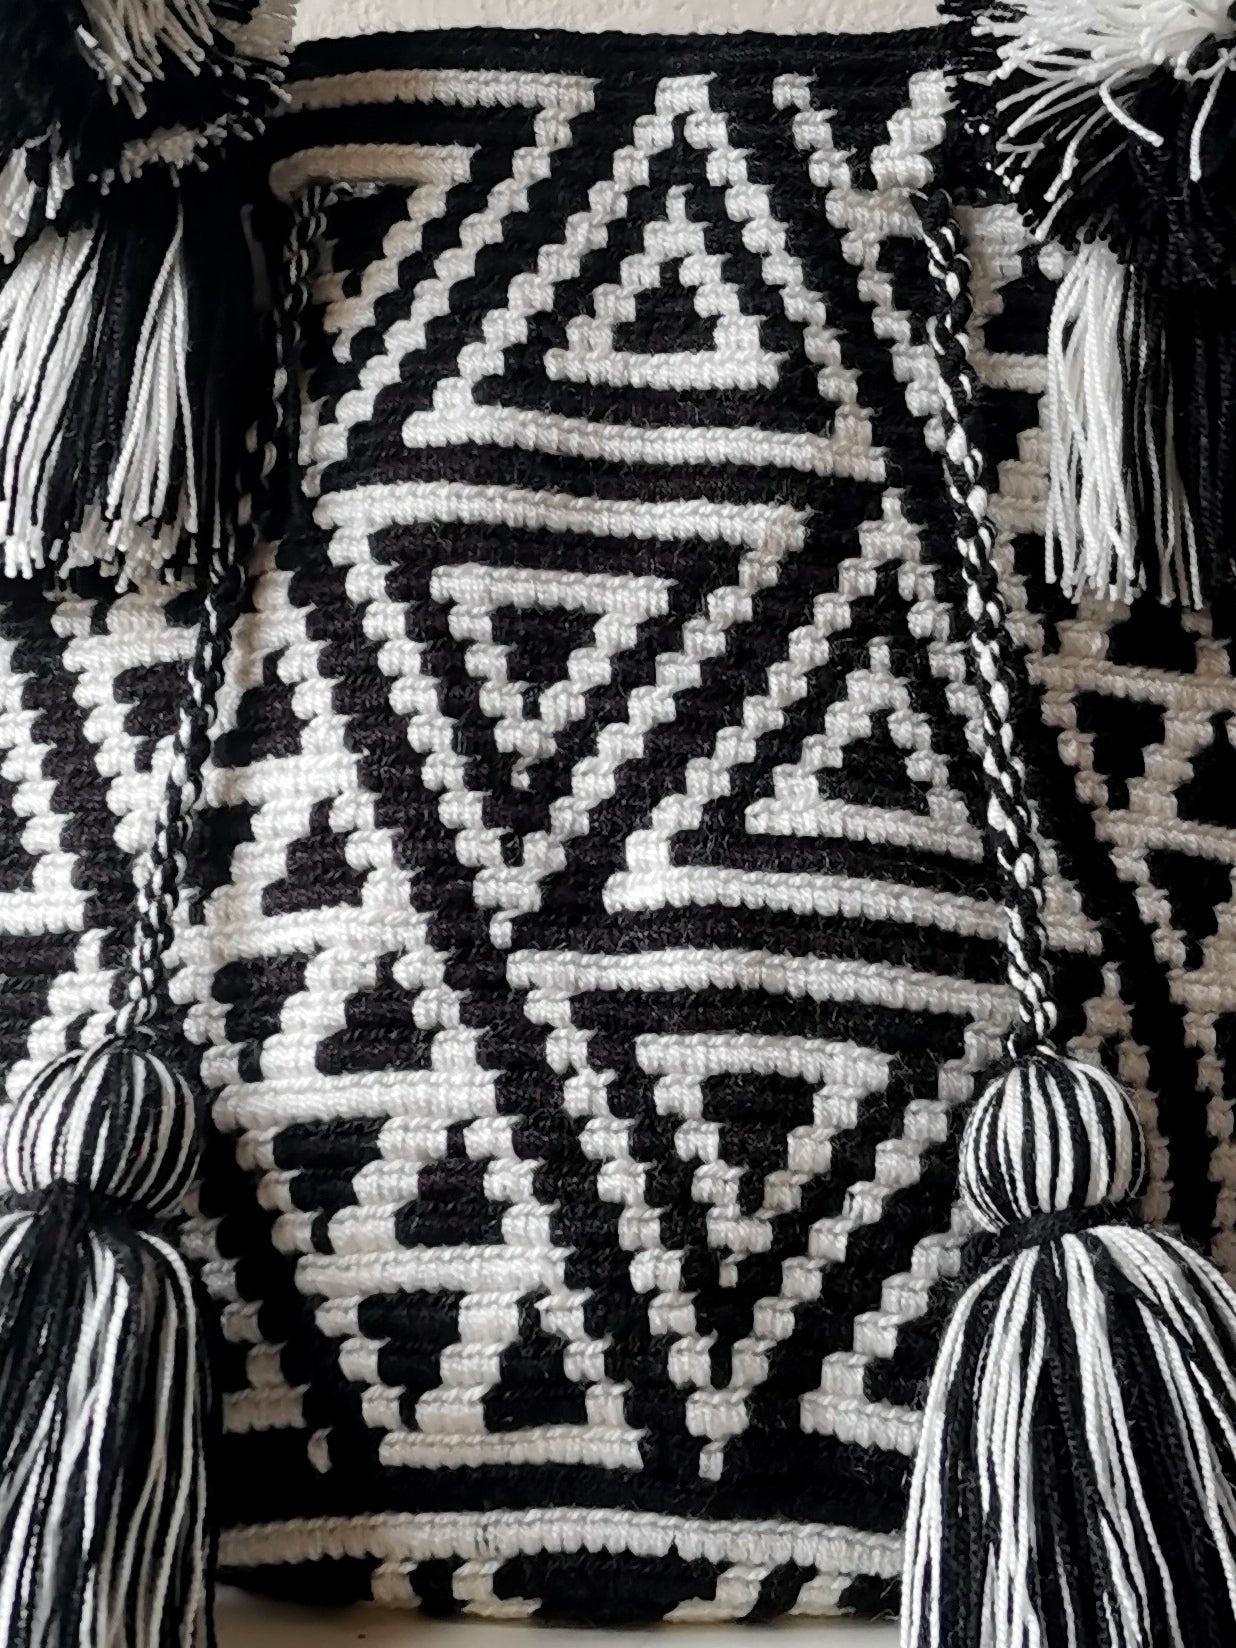 Black and white M mochila handbag